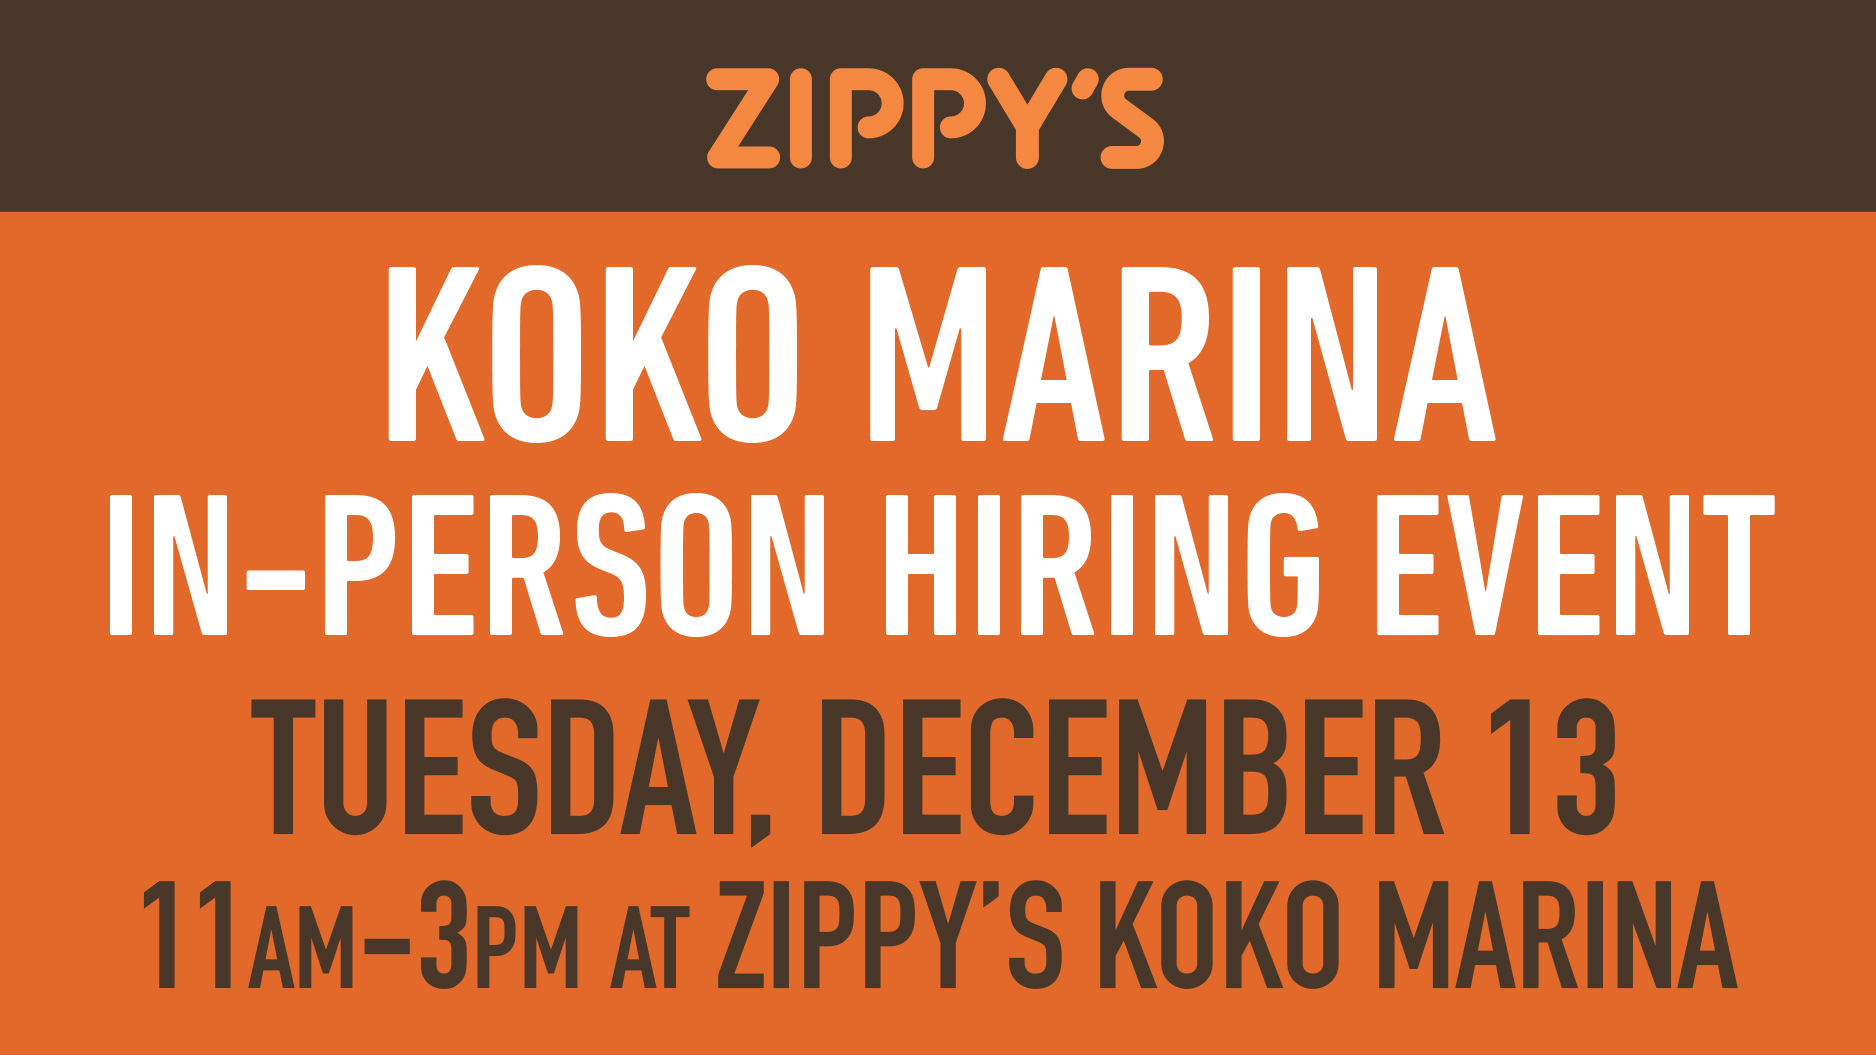 Zippy's Koko Marina In-Person Hiring Event